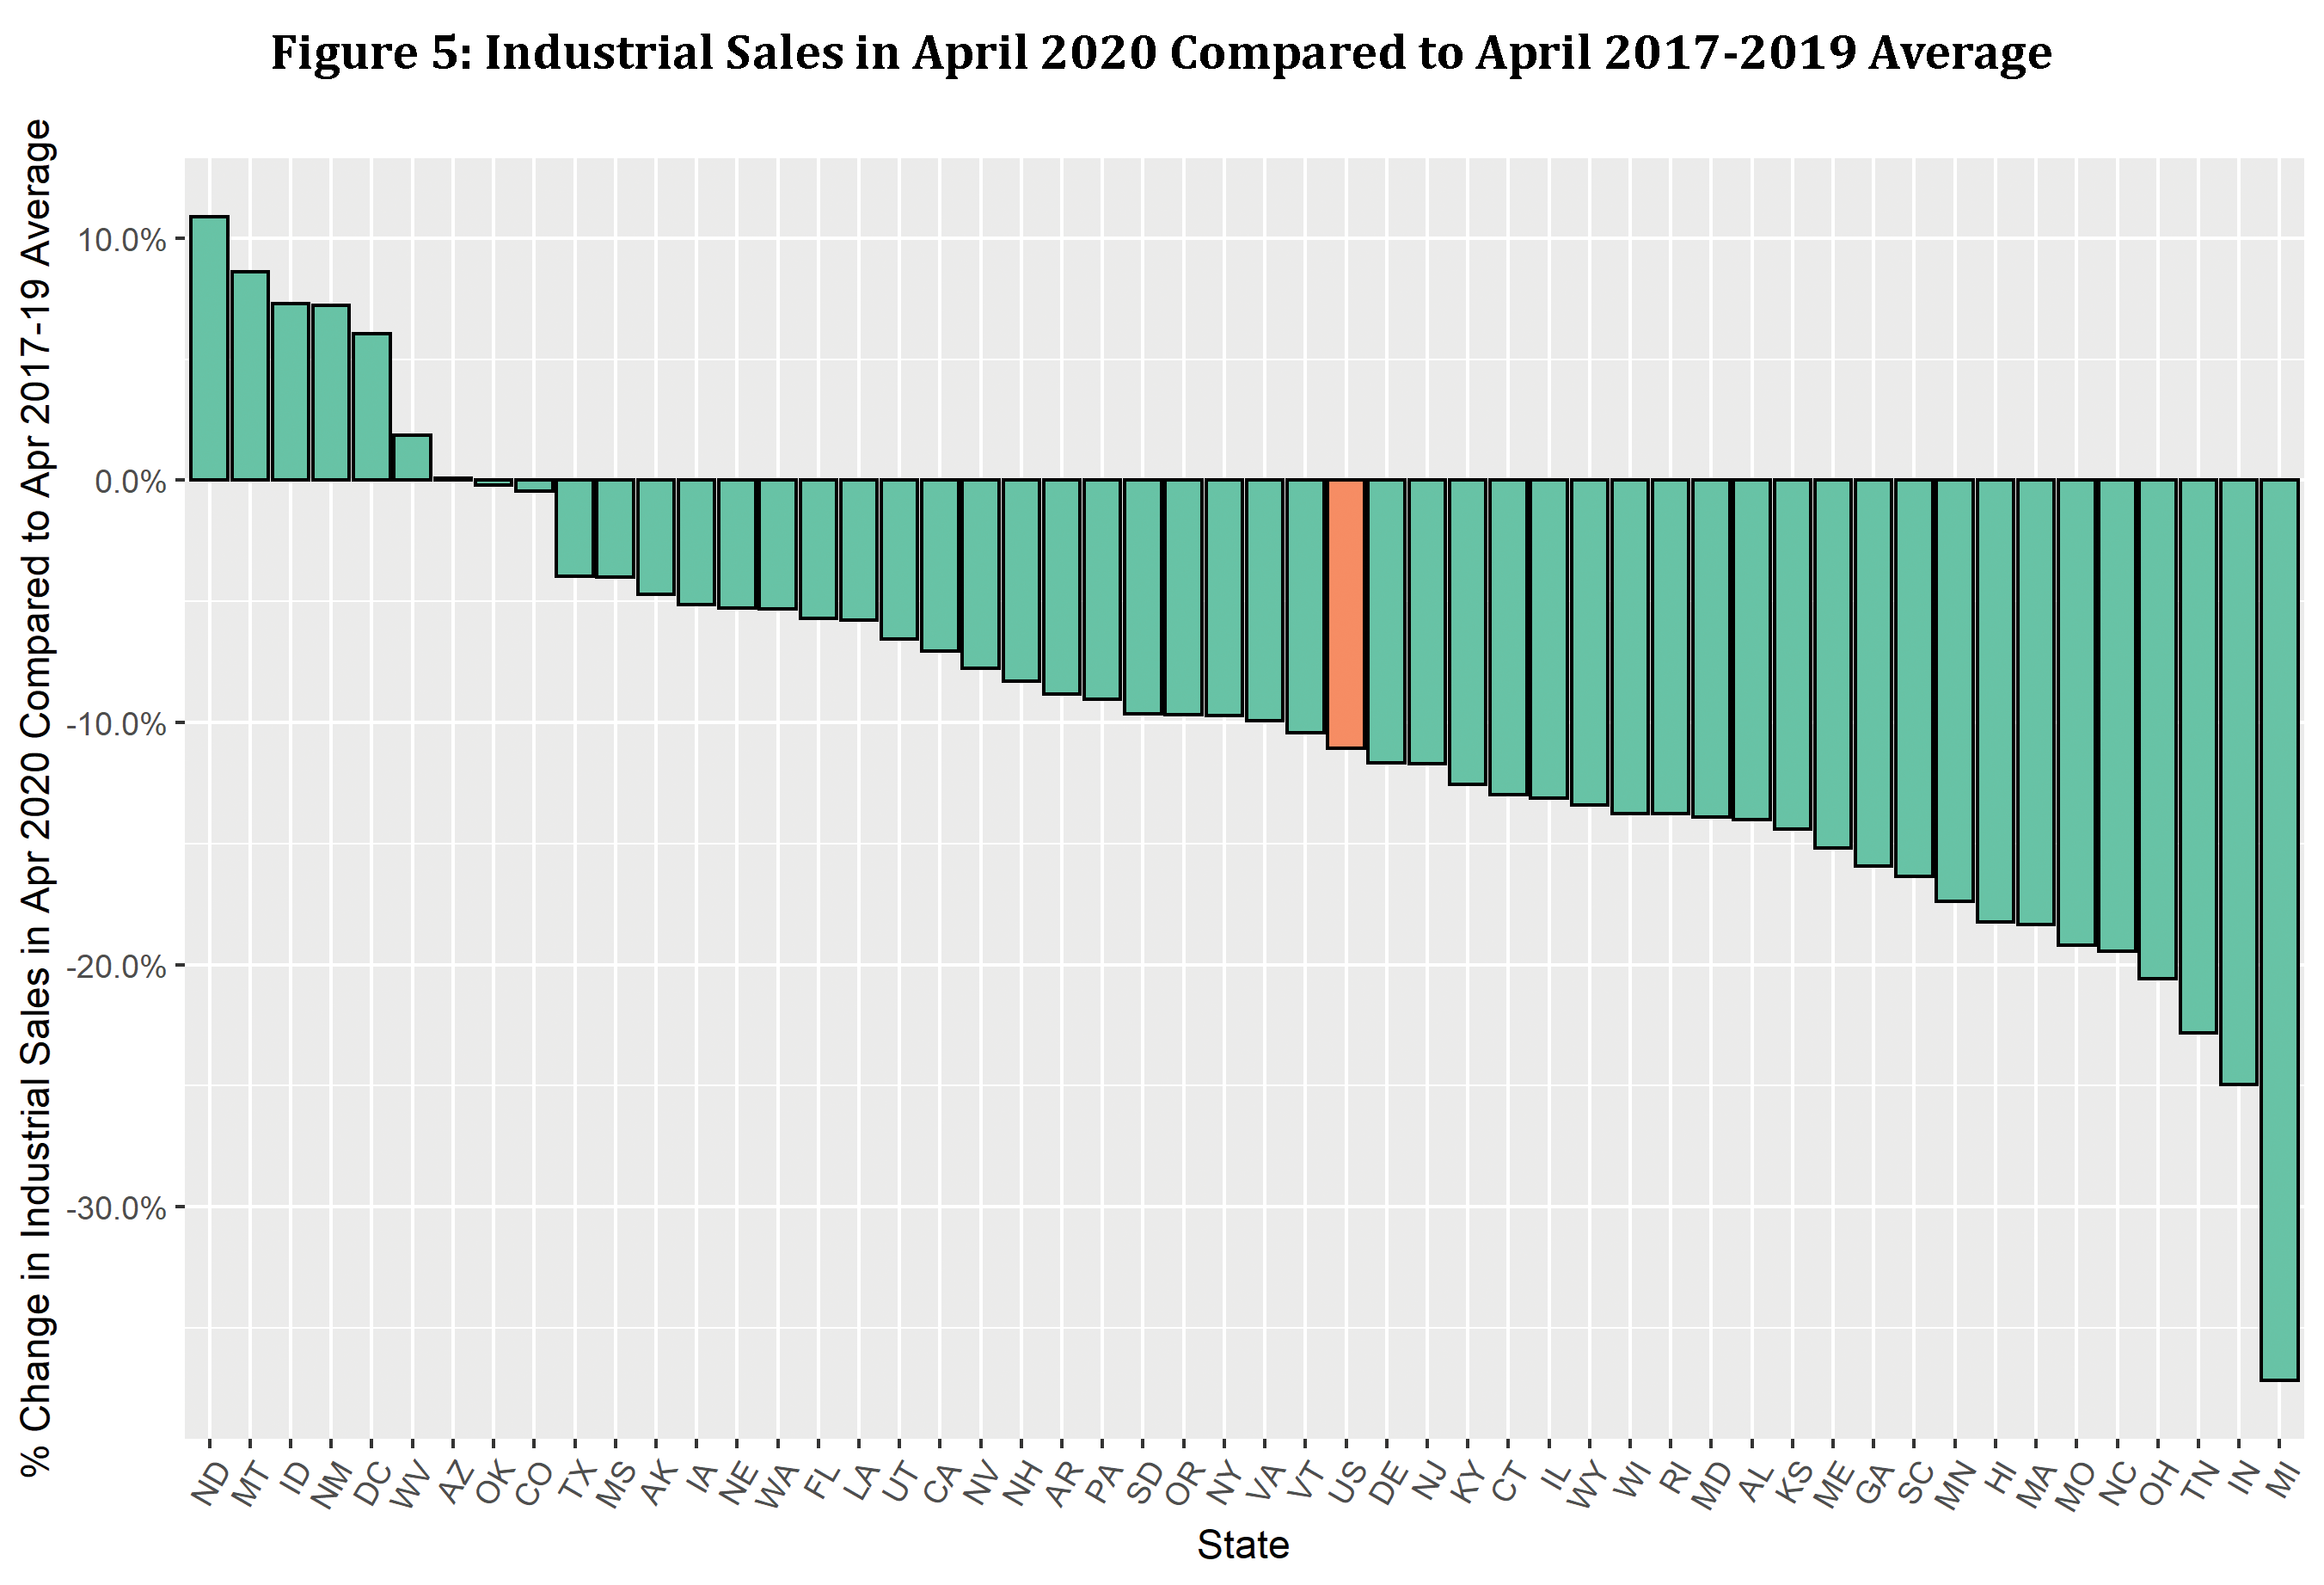 Utility Industrial Sales in April 2020